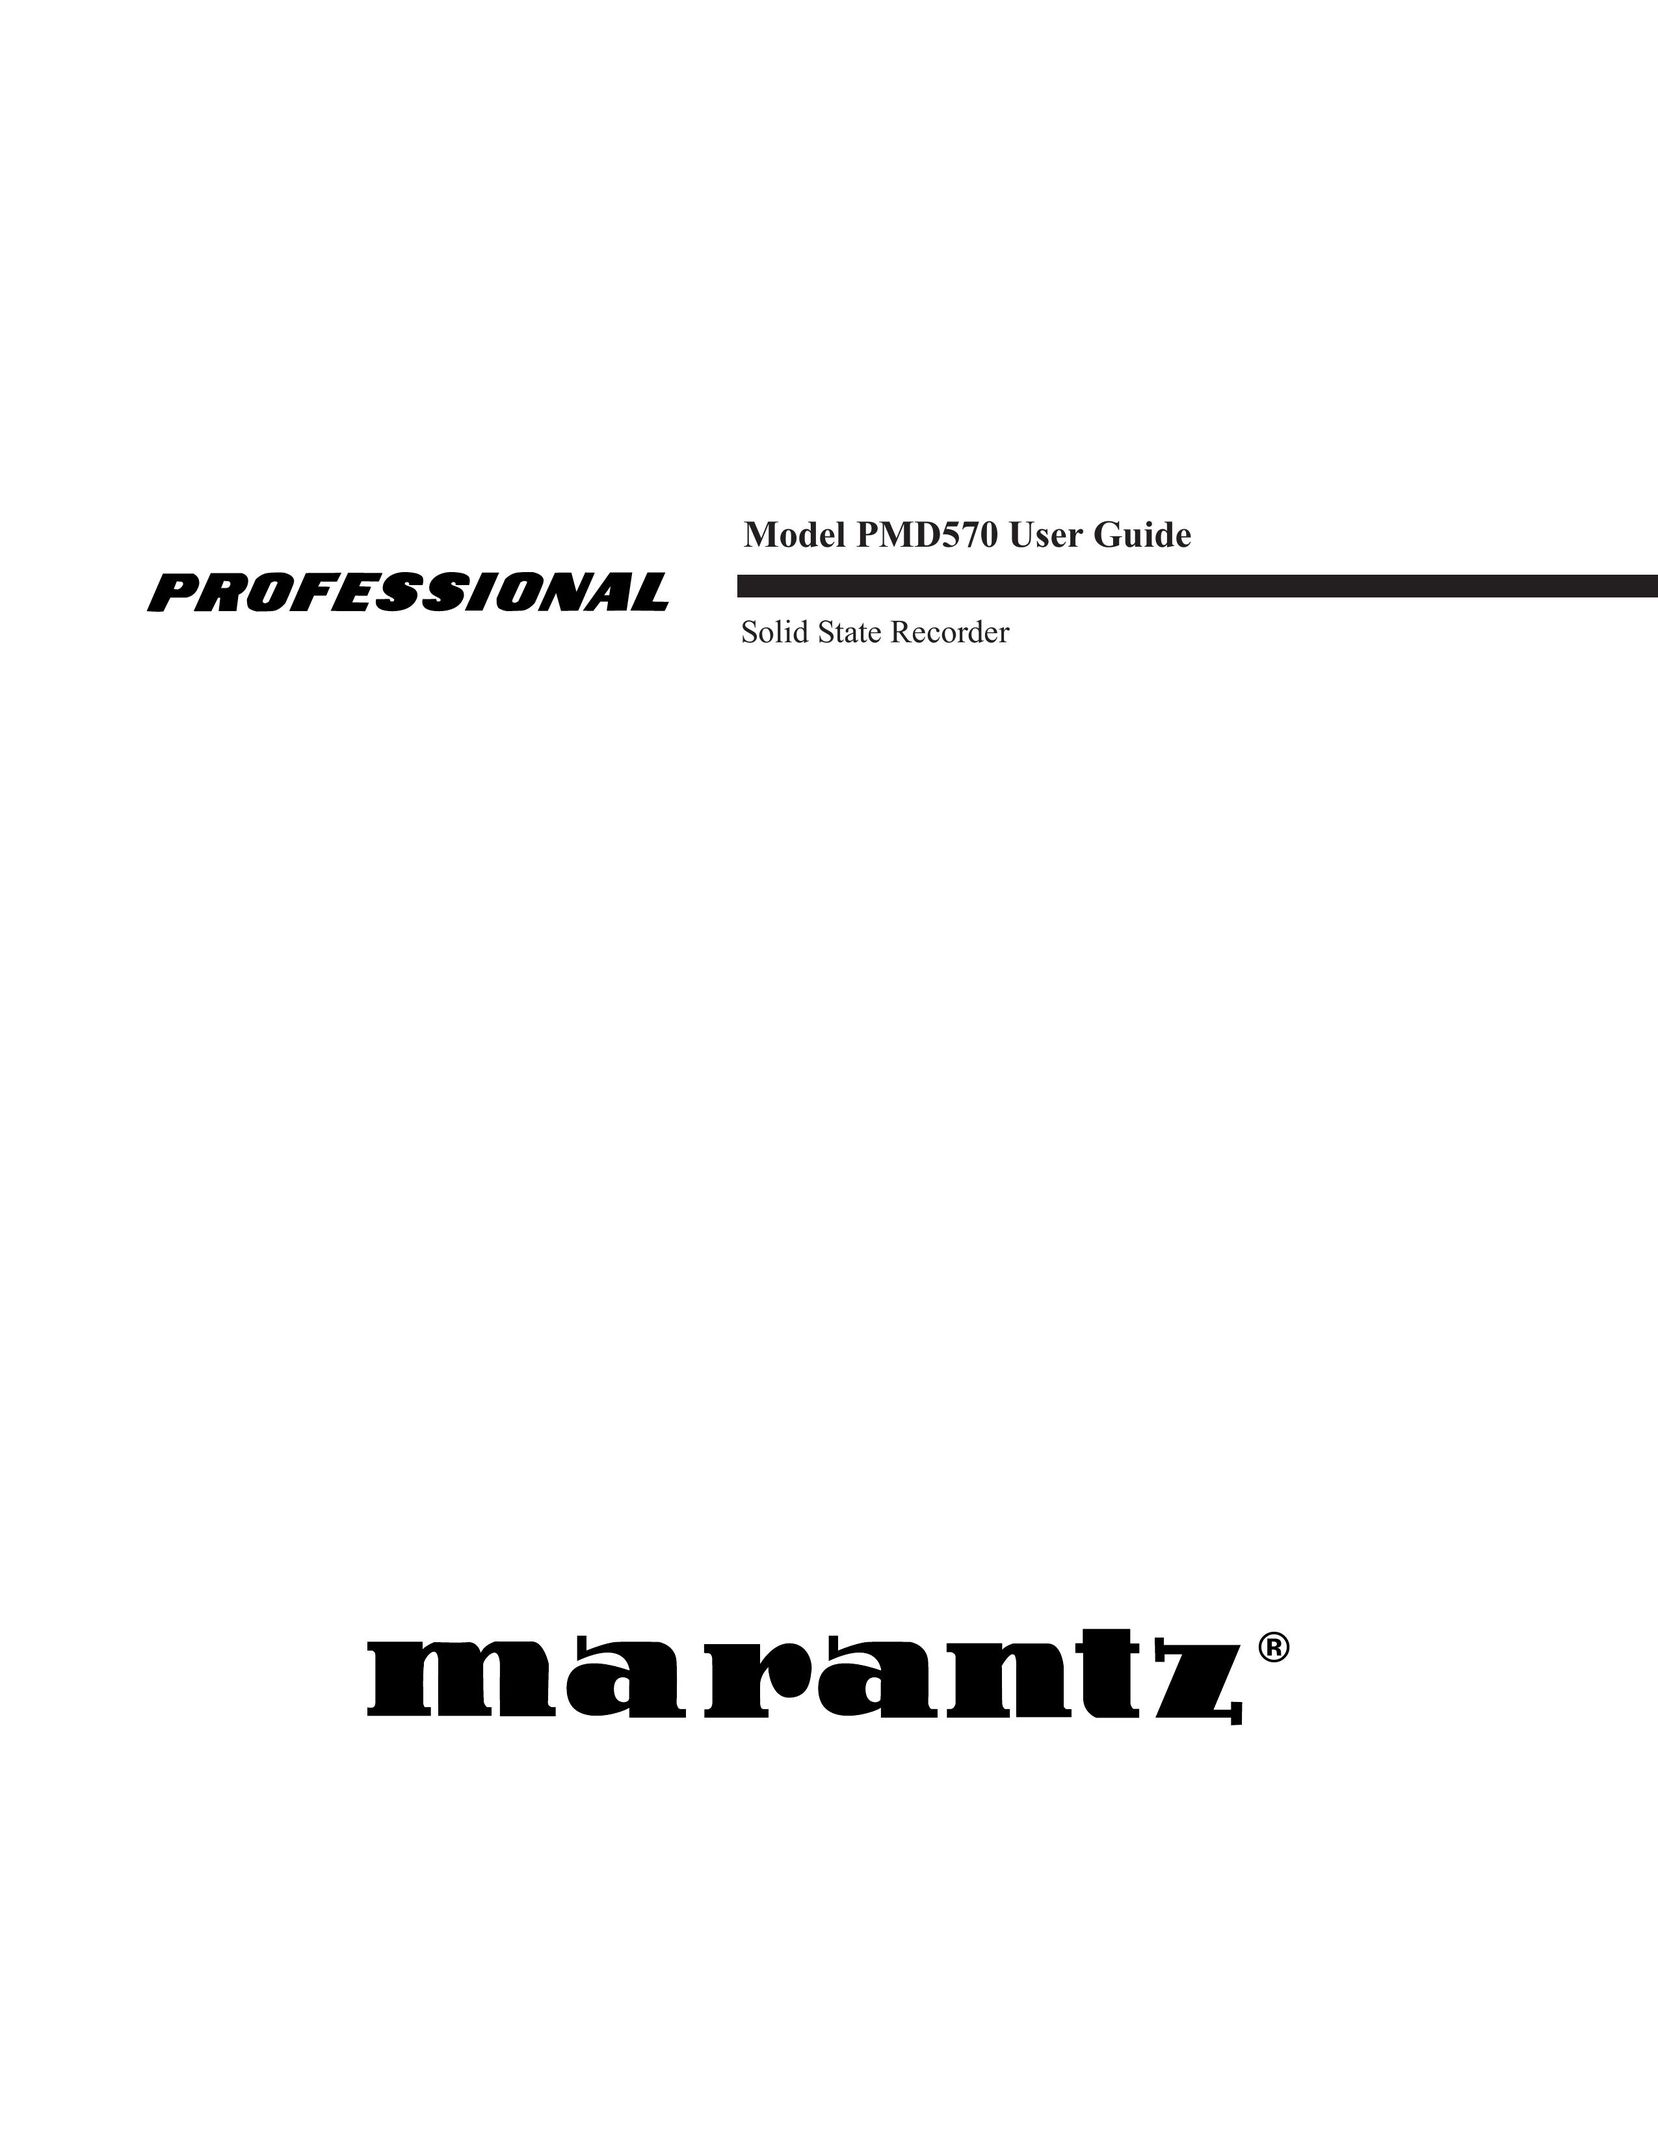 Marantz PMD570 MP3 Player User Manual